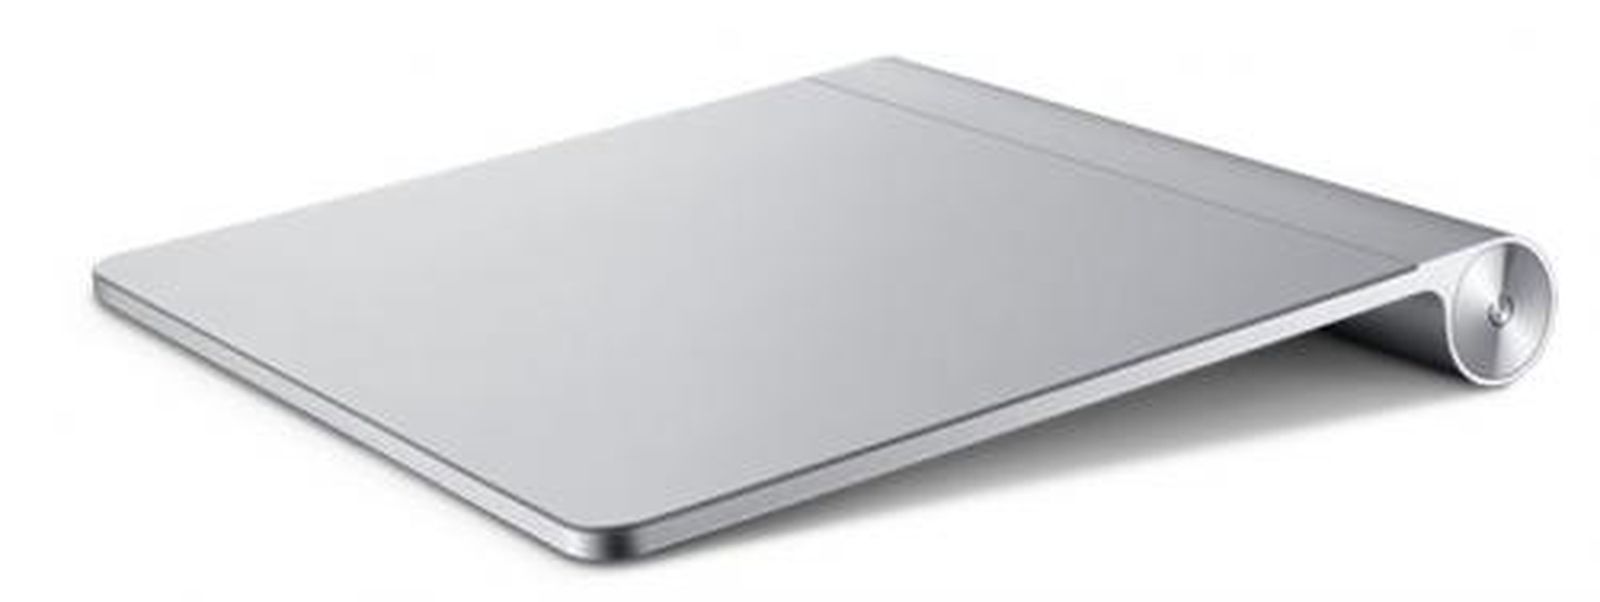 Apple Releases the Magic Trackpad - MacRumors